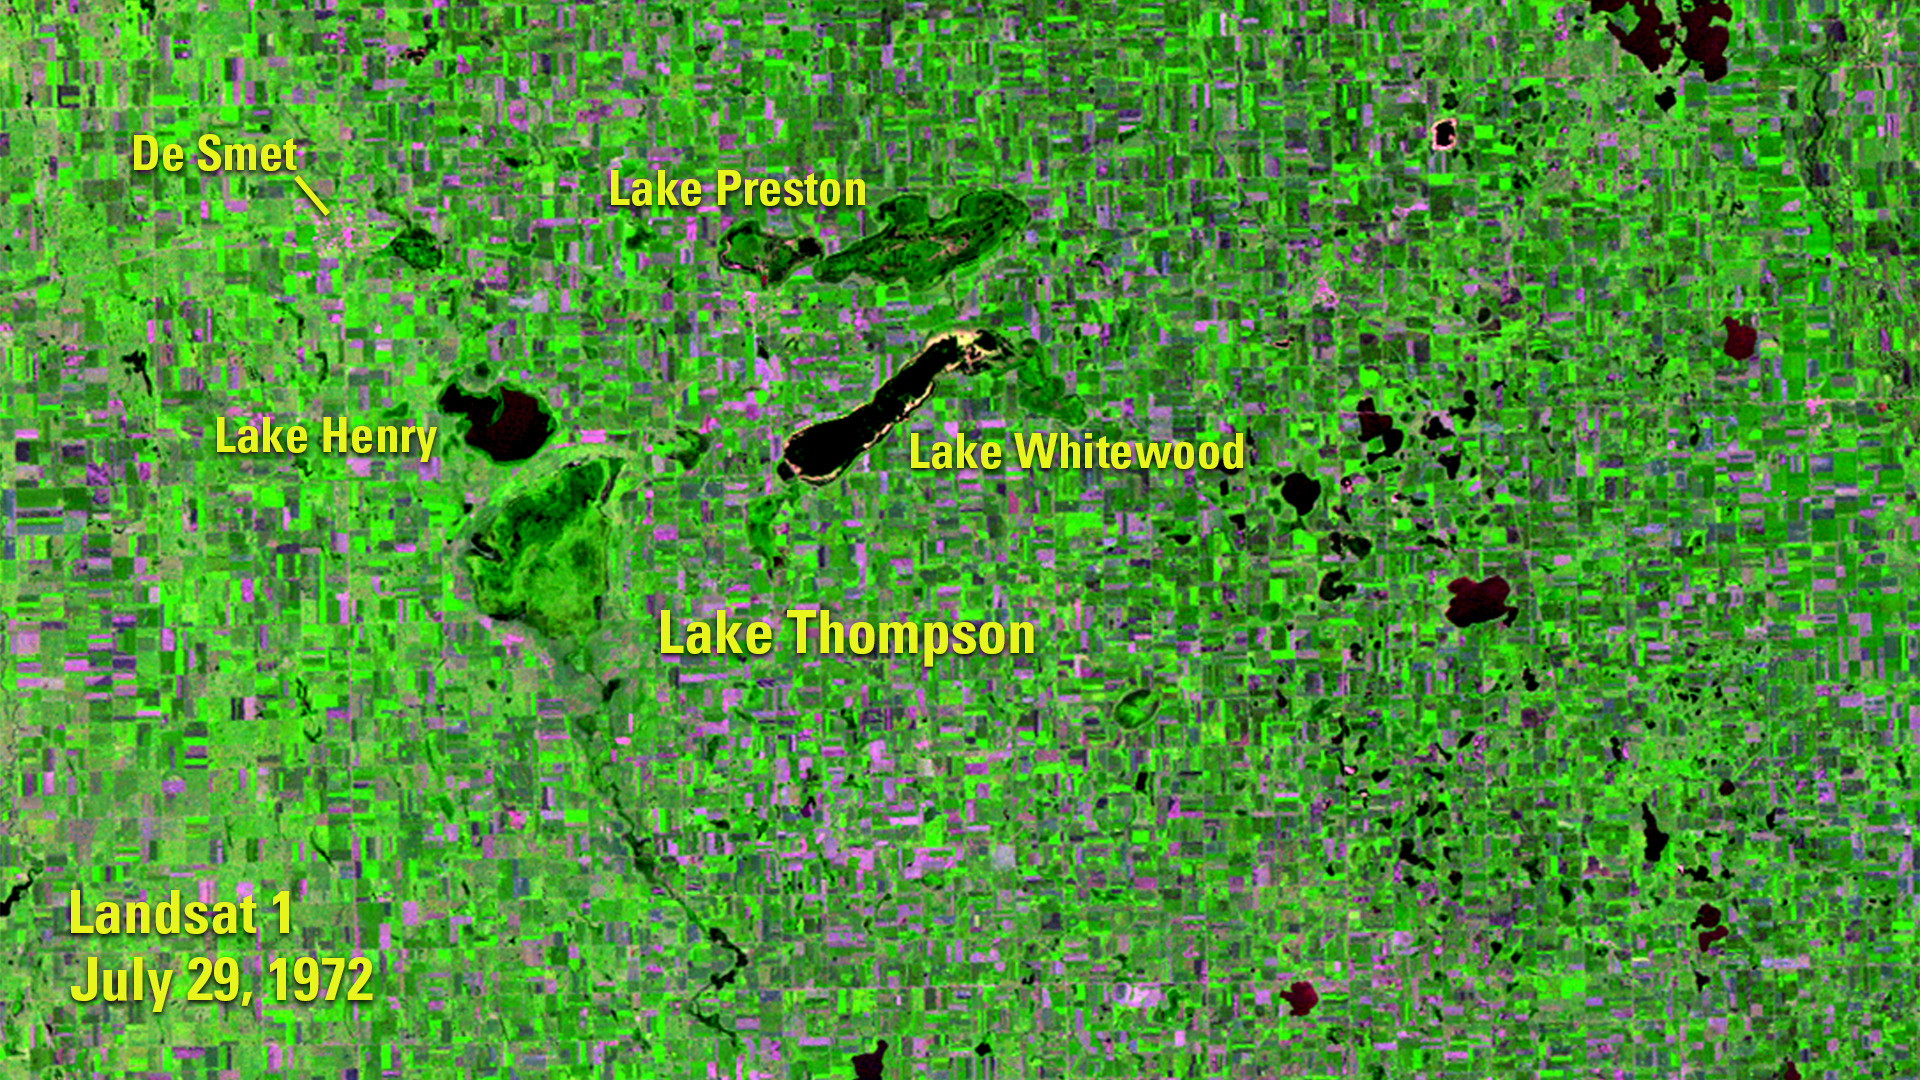 Lake Thompson, South Dakota before